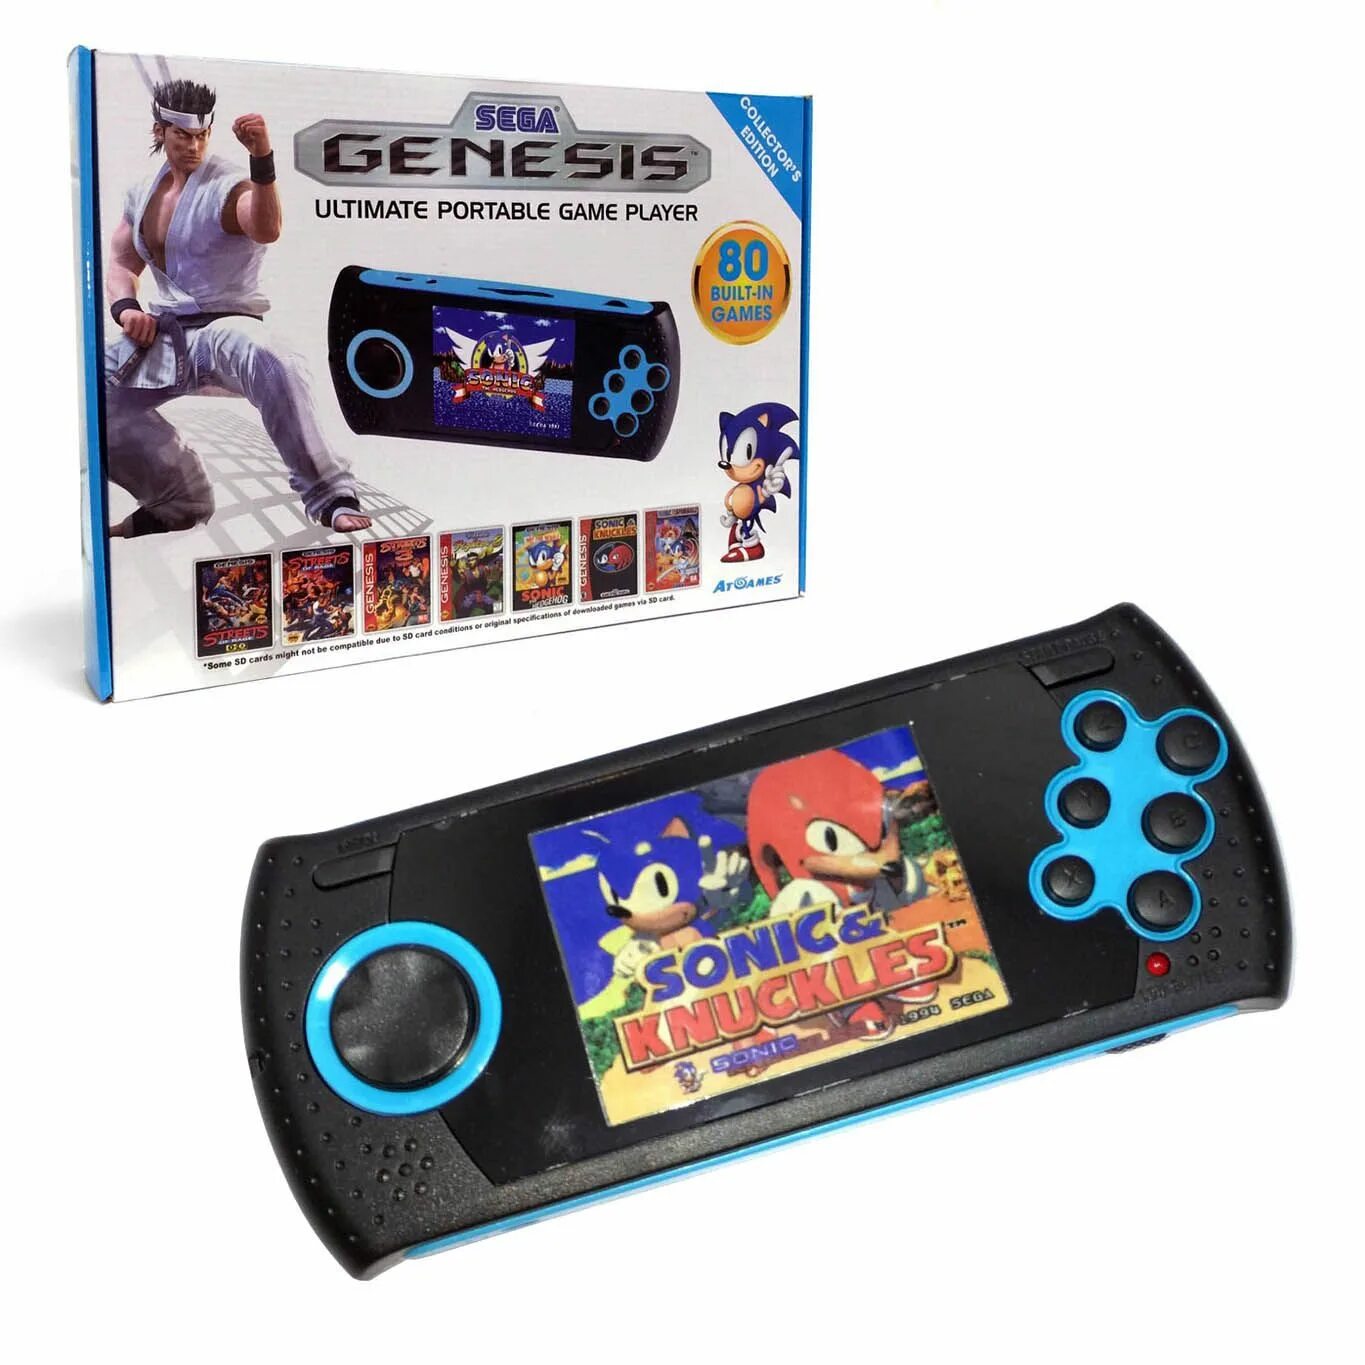 Sega Genesis Ultimate Portable. Sega Mega Drive Ultimate портативная. Аркада Mega Drive Portable. Портативная Sega Mega Drive Genesis Portable. Максимально портативный